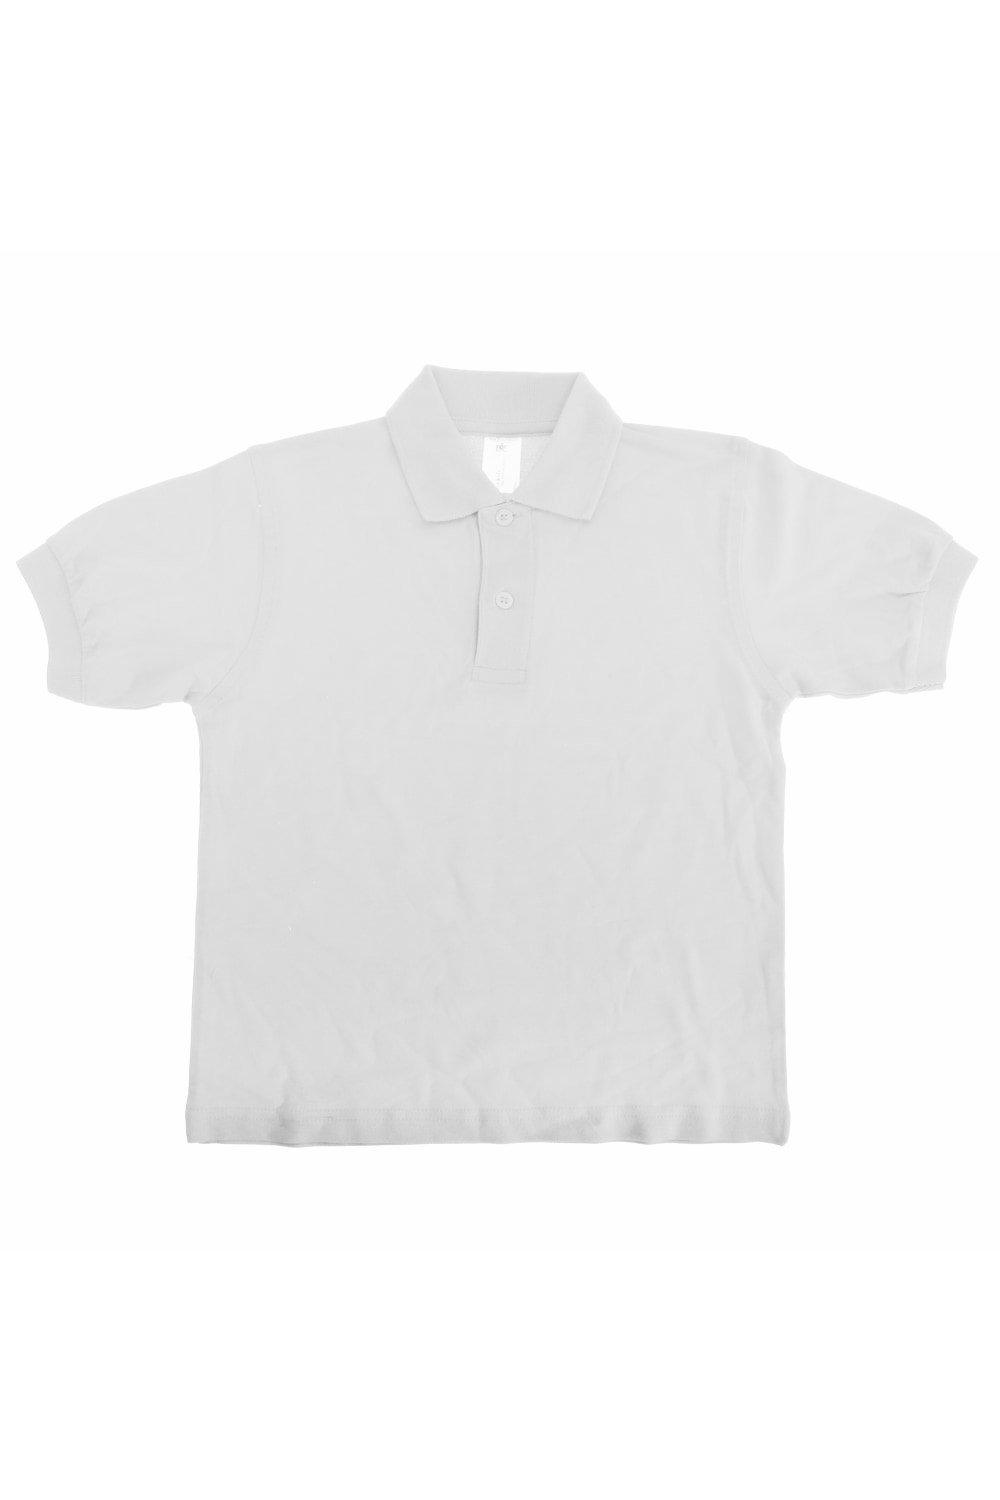 Рубашка-поло Safran B&C, белый